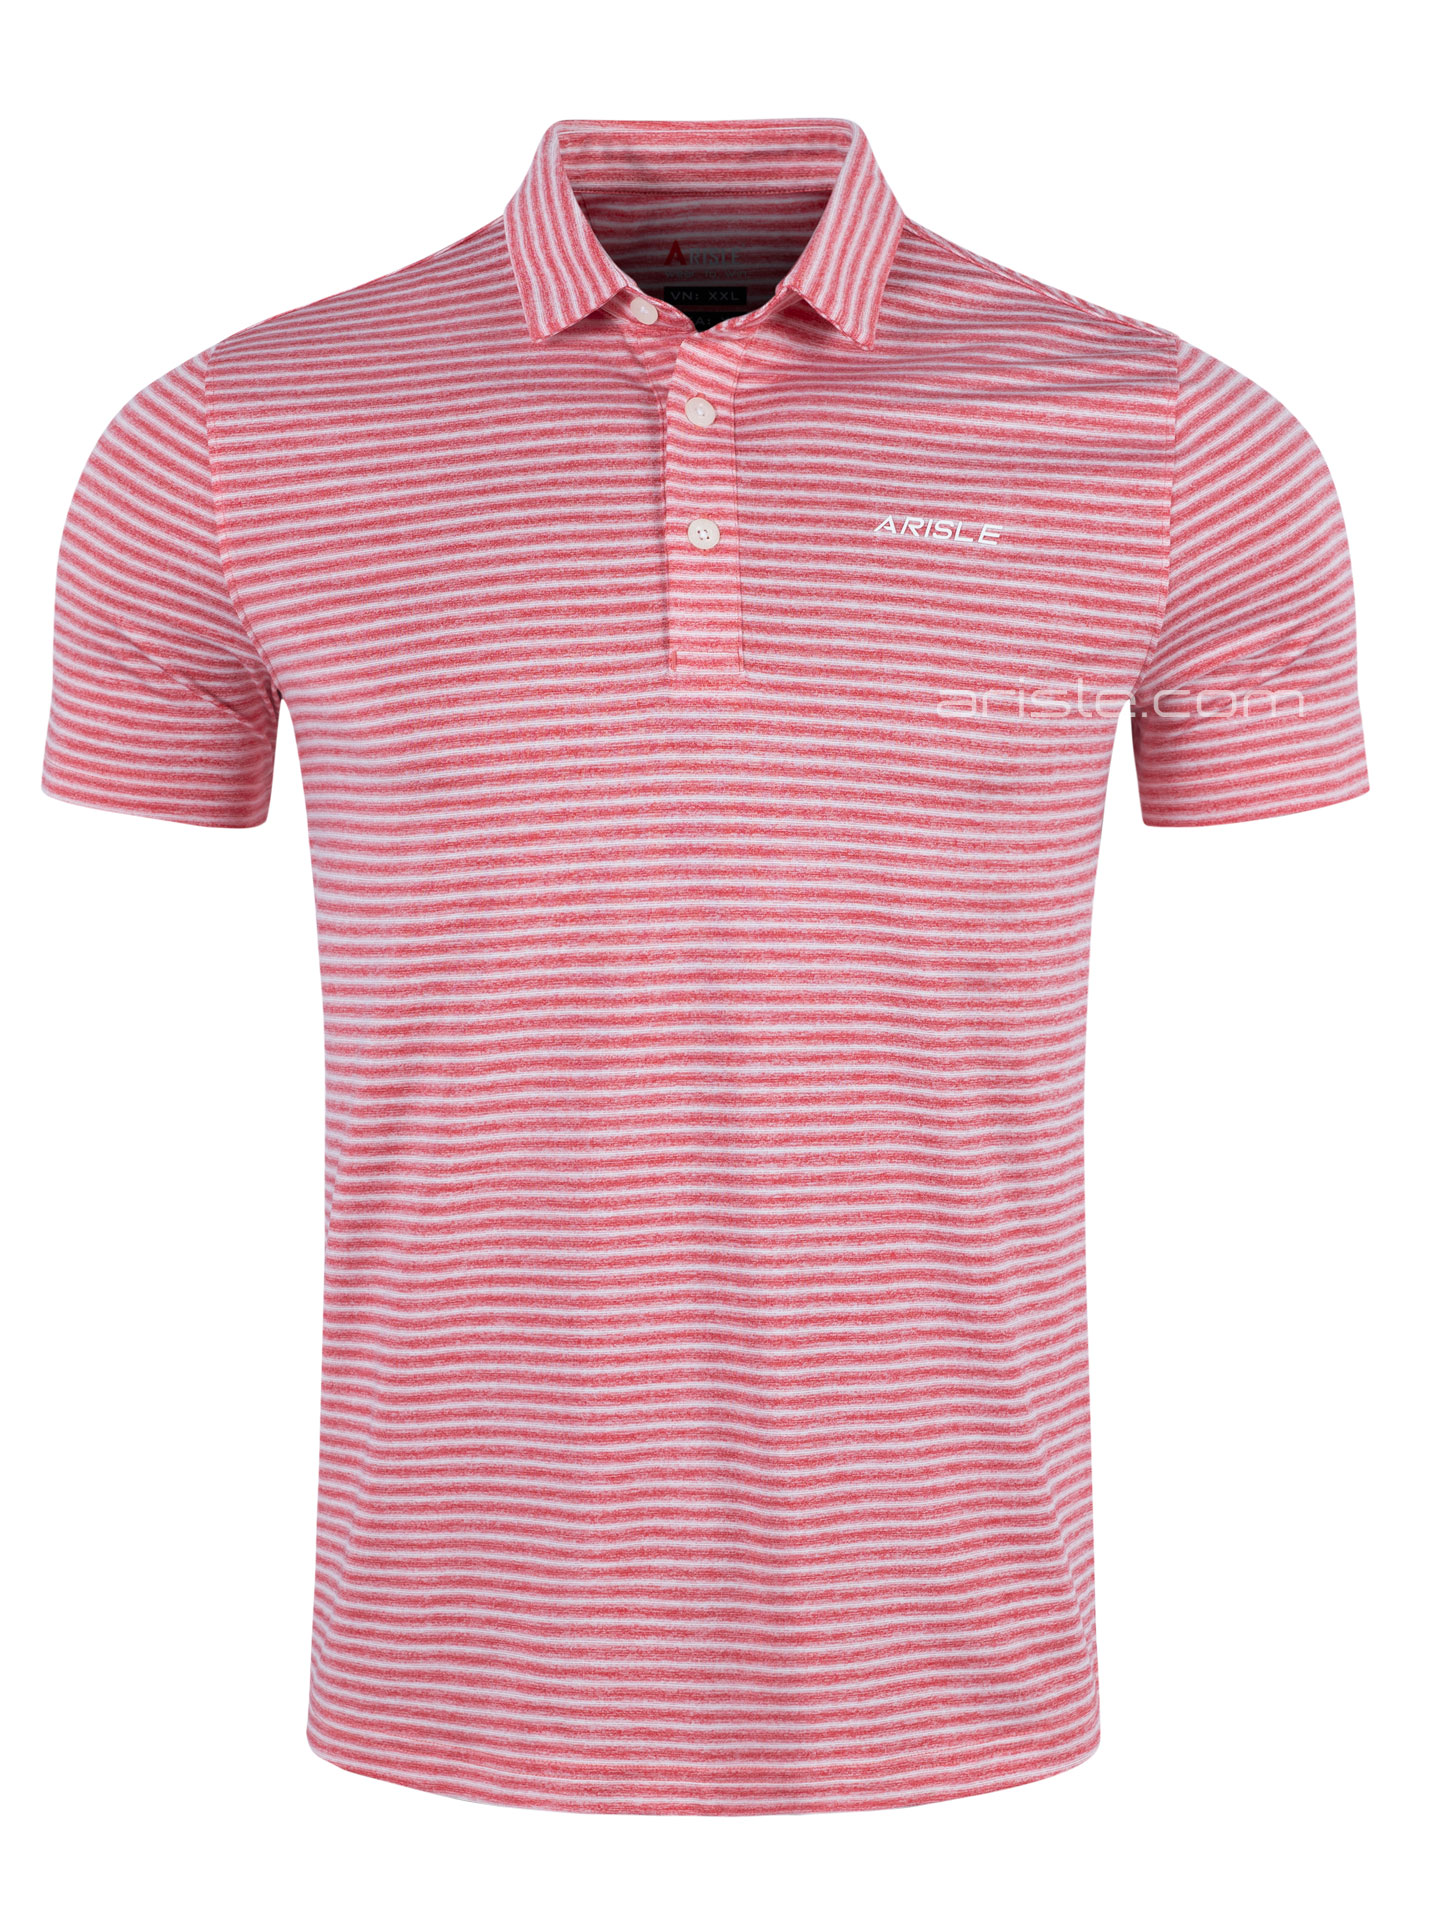 Ao-Polo-Golf-Bossman-Pixel-Stripe-Coral-Red-1